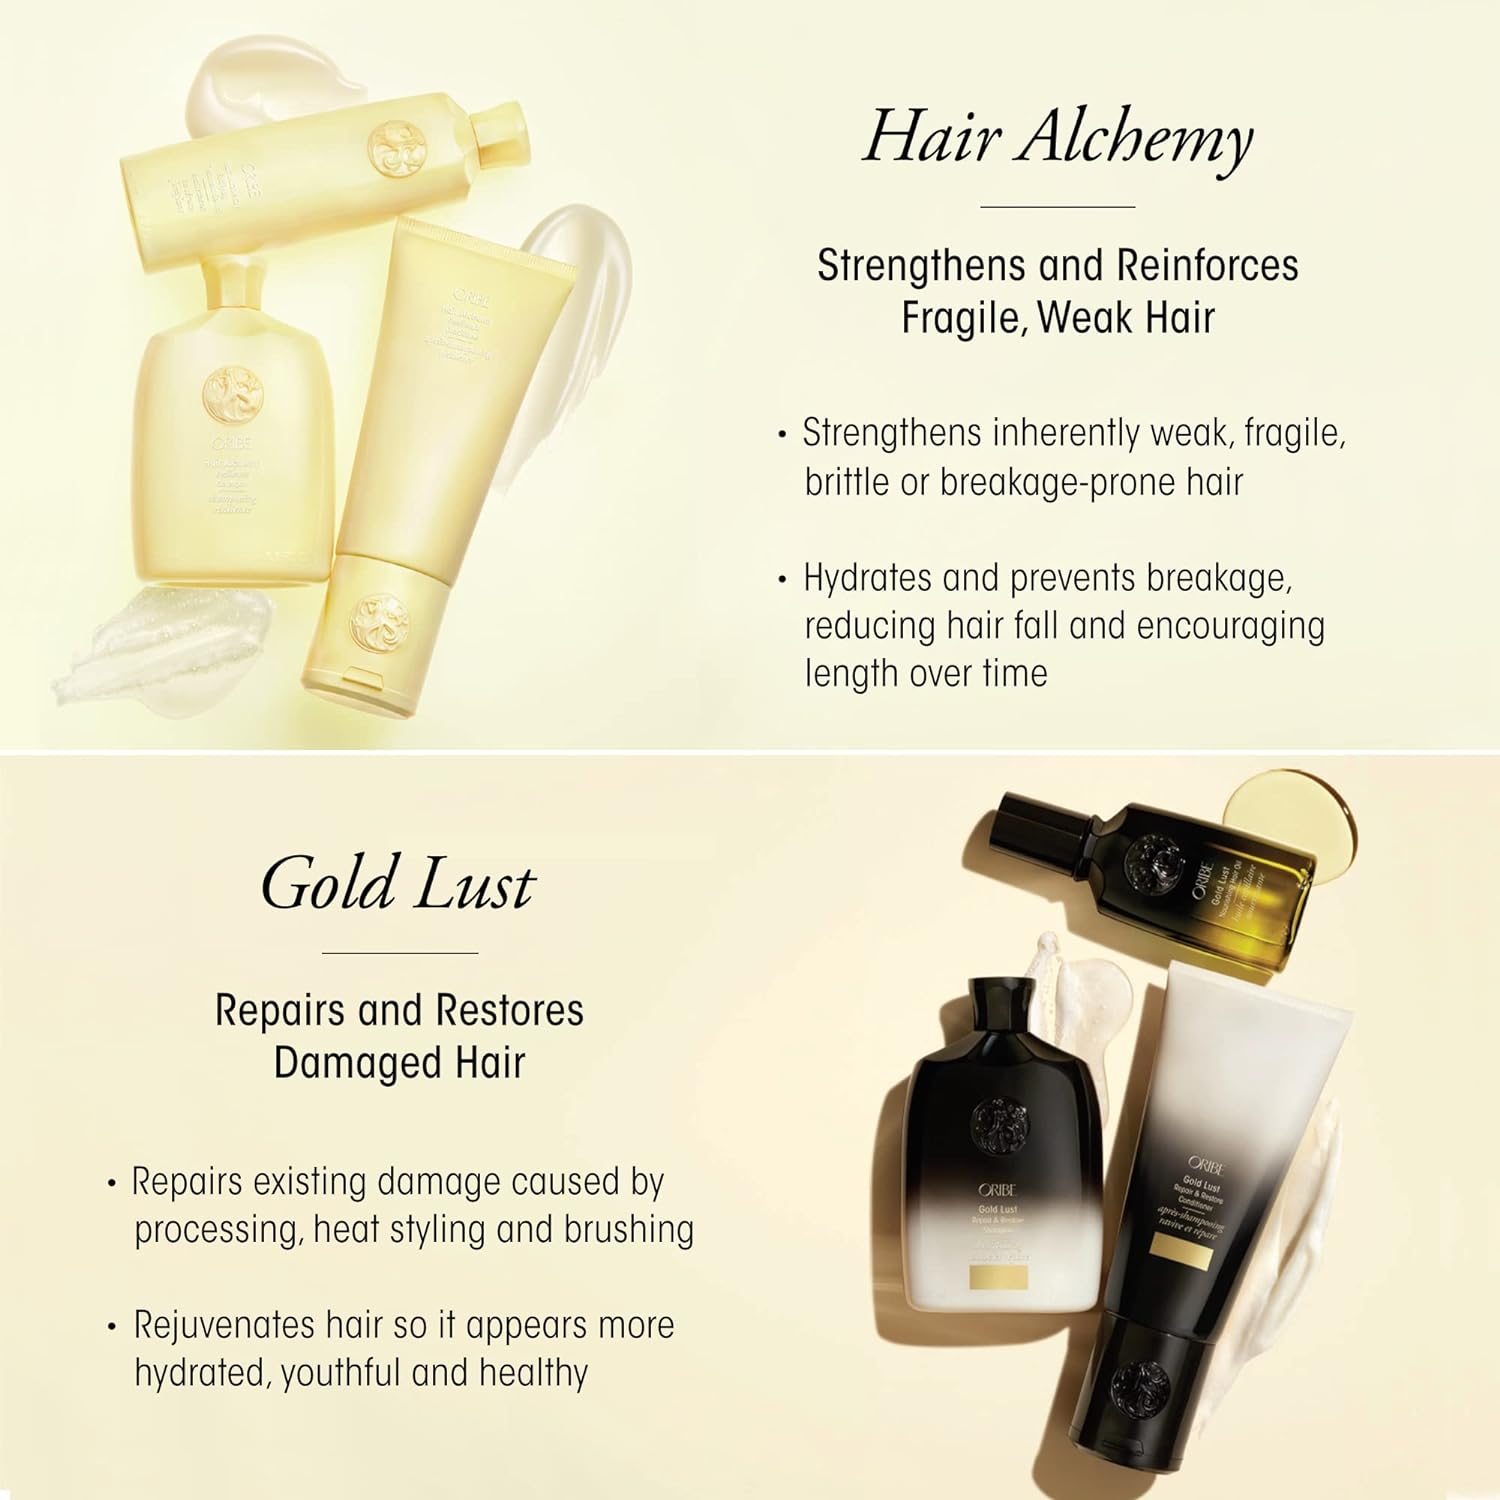 Oribe Hair Alchemy Resilience Shampoo, 2.5 oz : Beauty & Personal Care